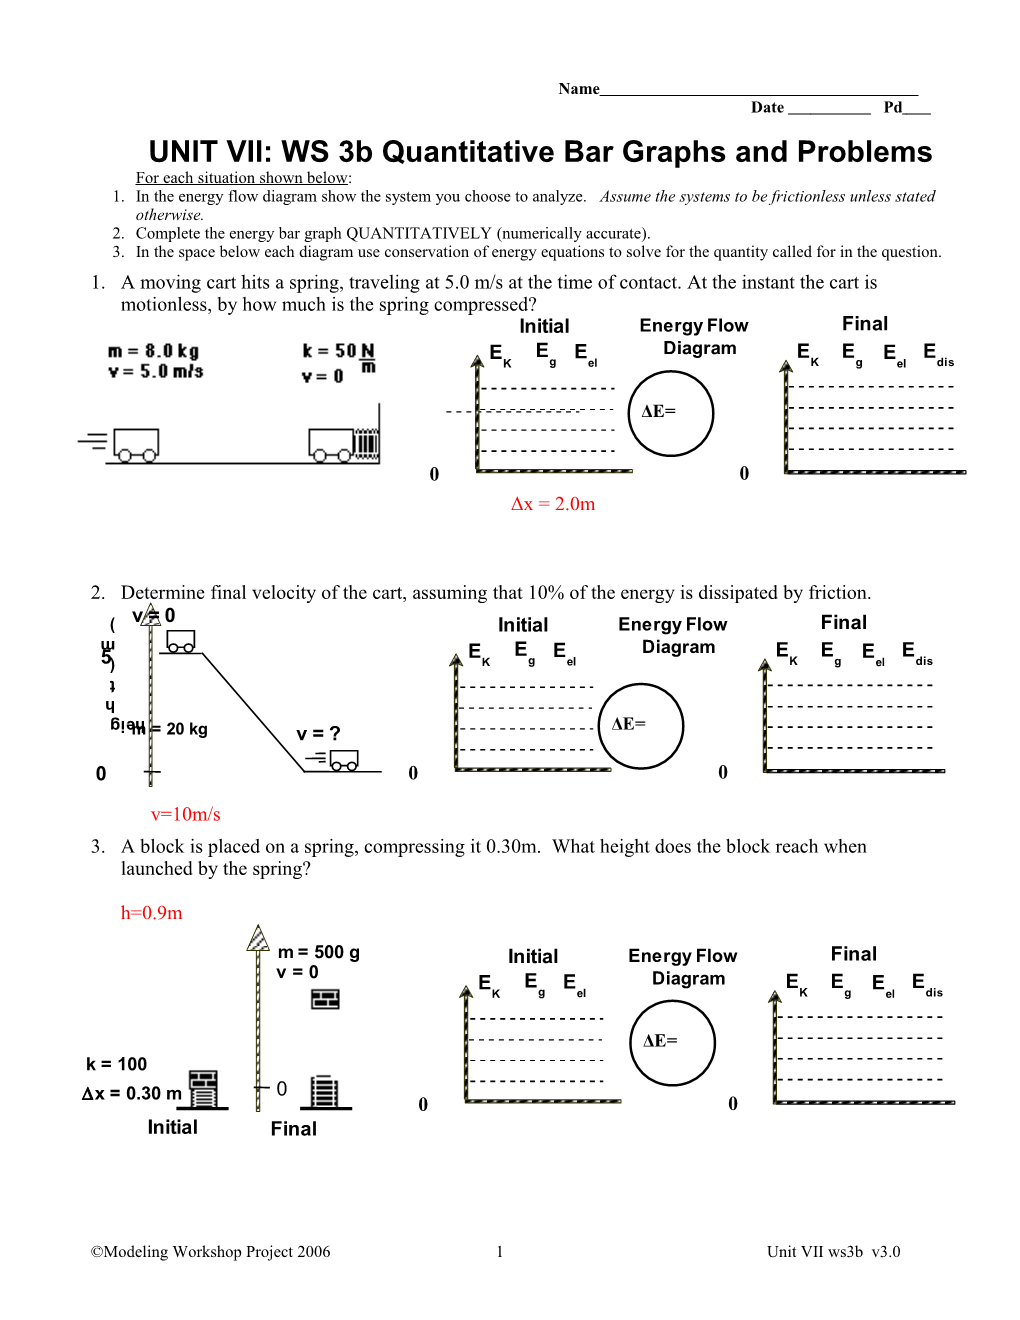 UNIT VII: WS 3B Quantitative Bar Graphs and Problems